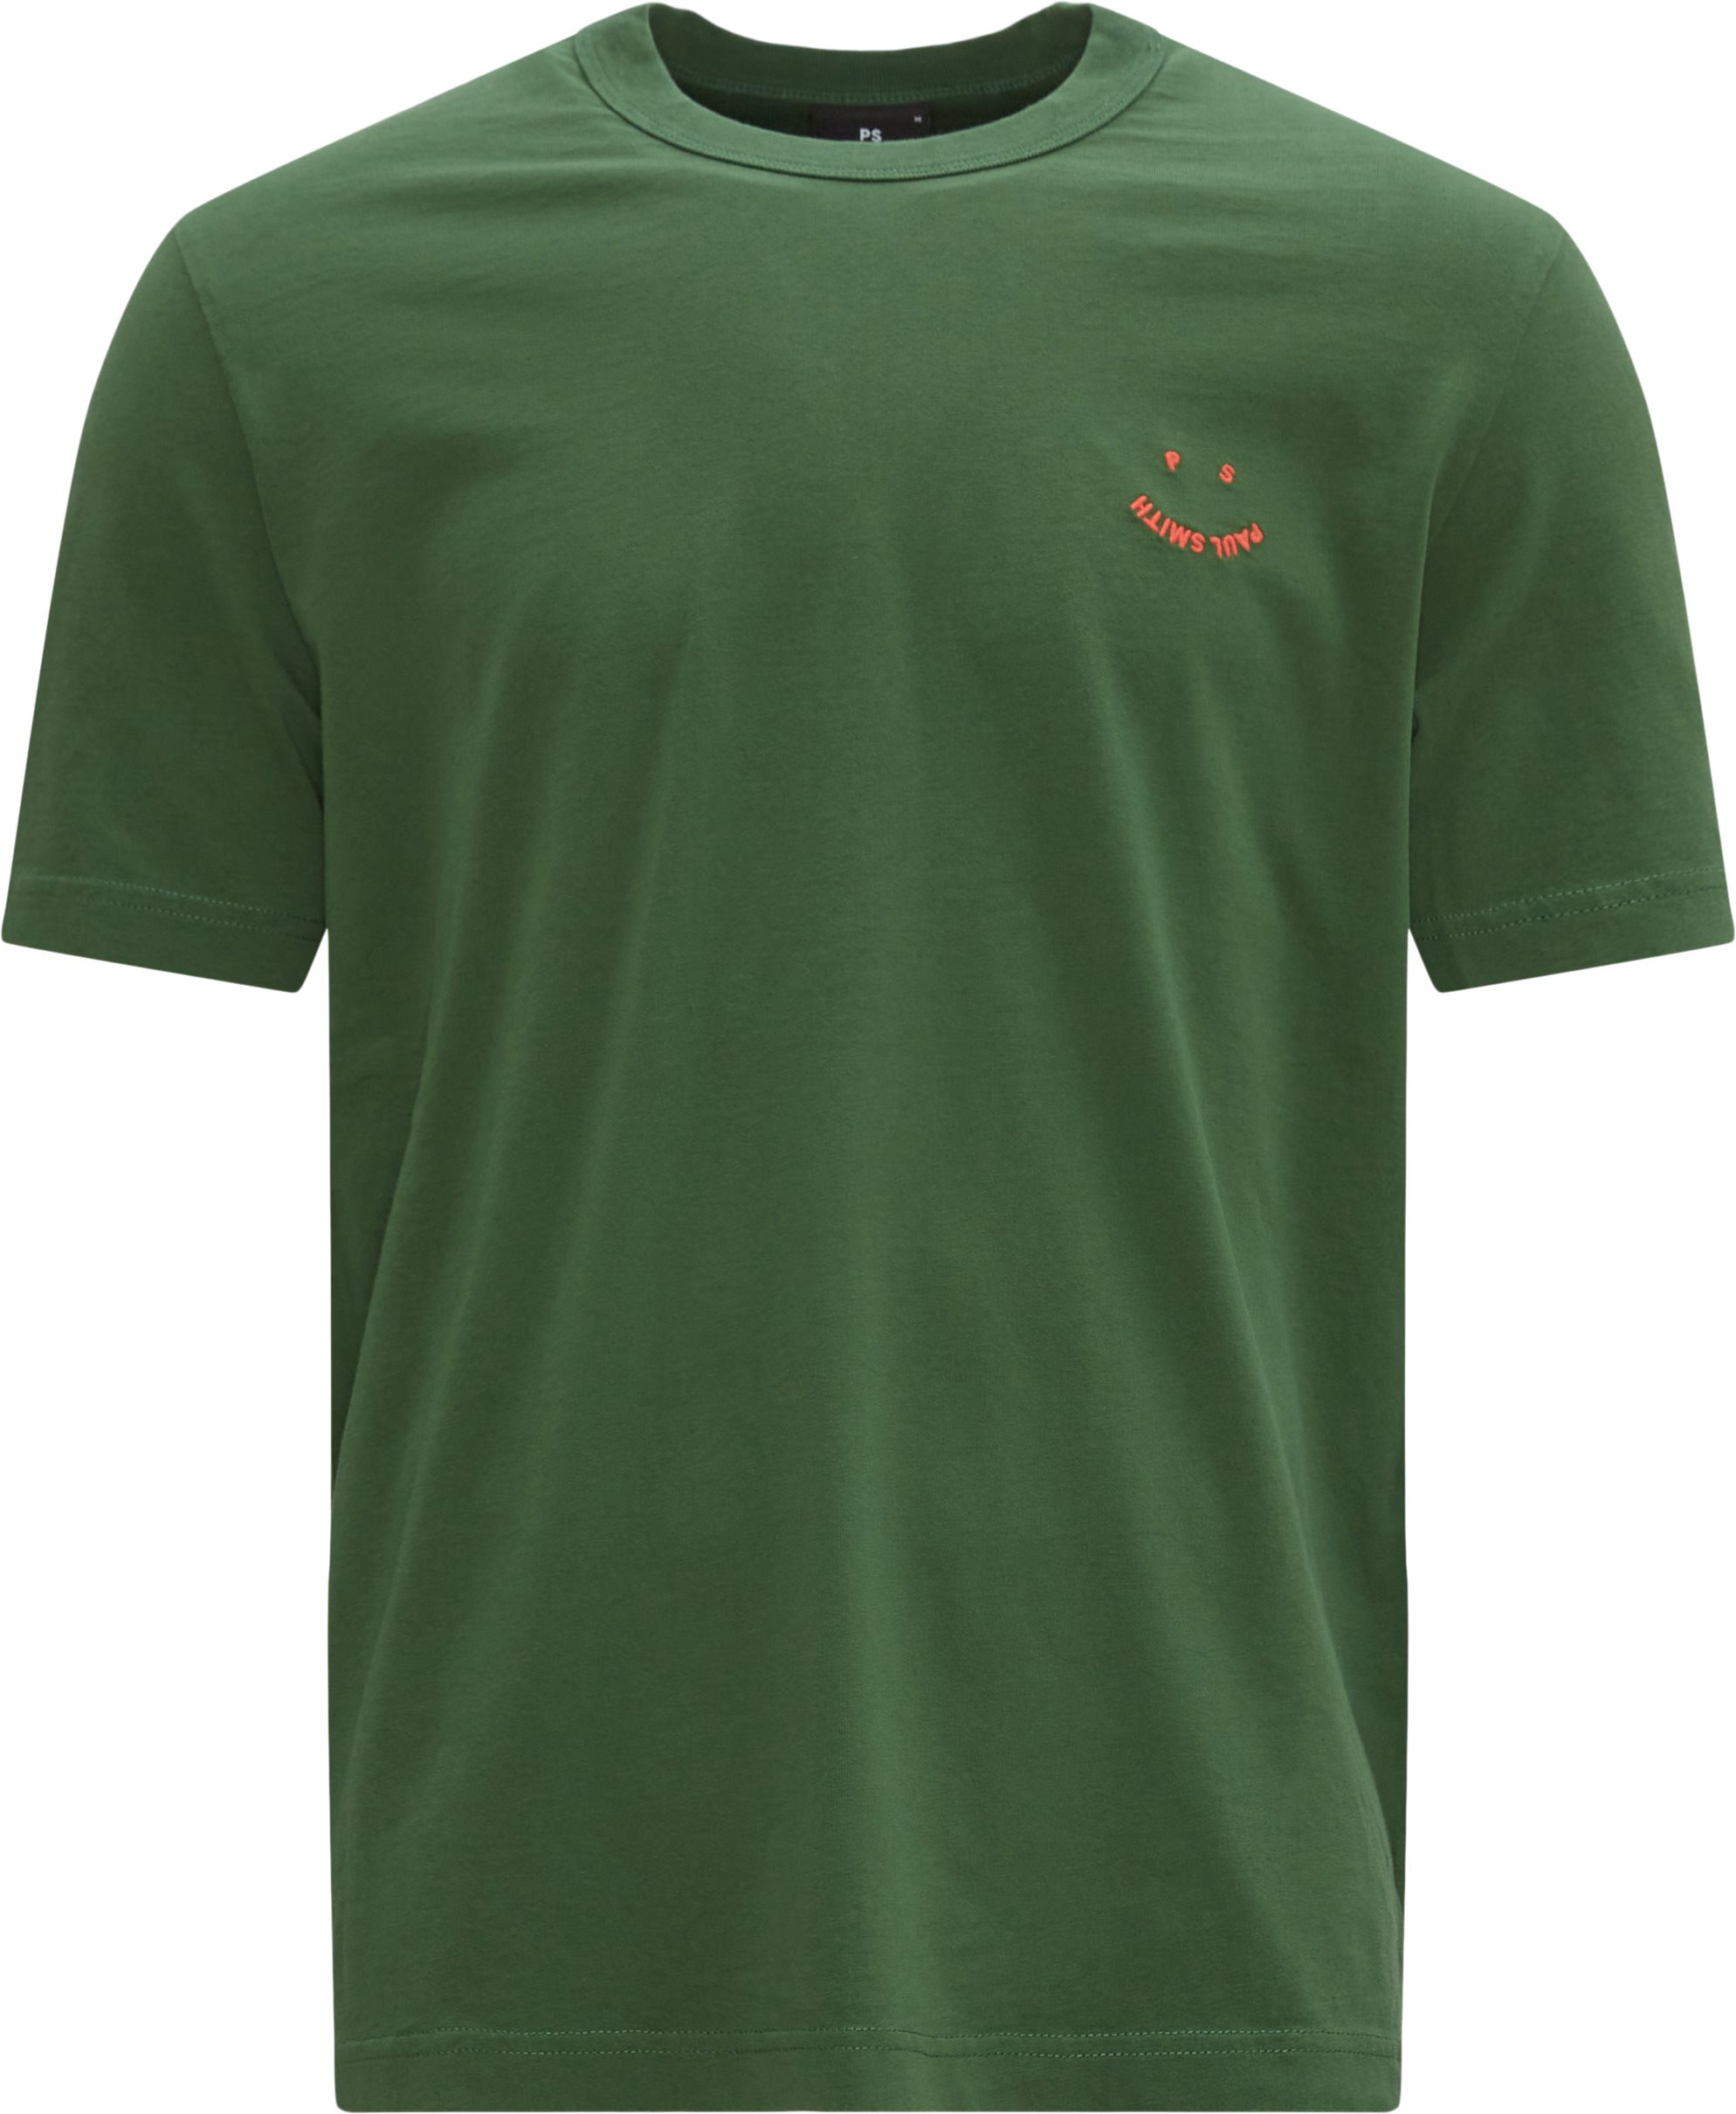 PS Paul Smith T-shirts 673X J21154 Green